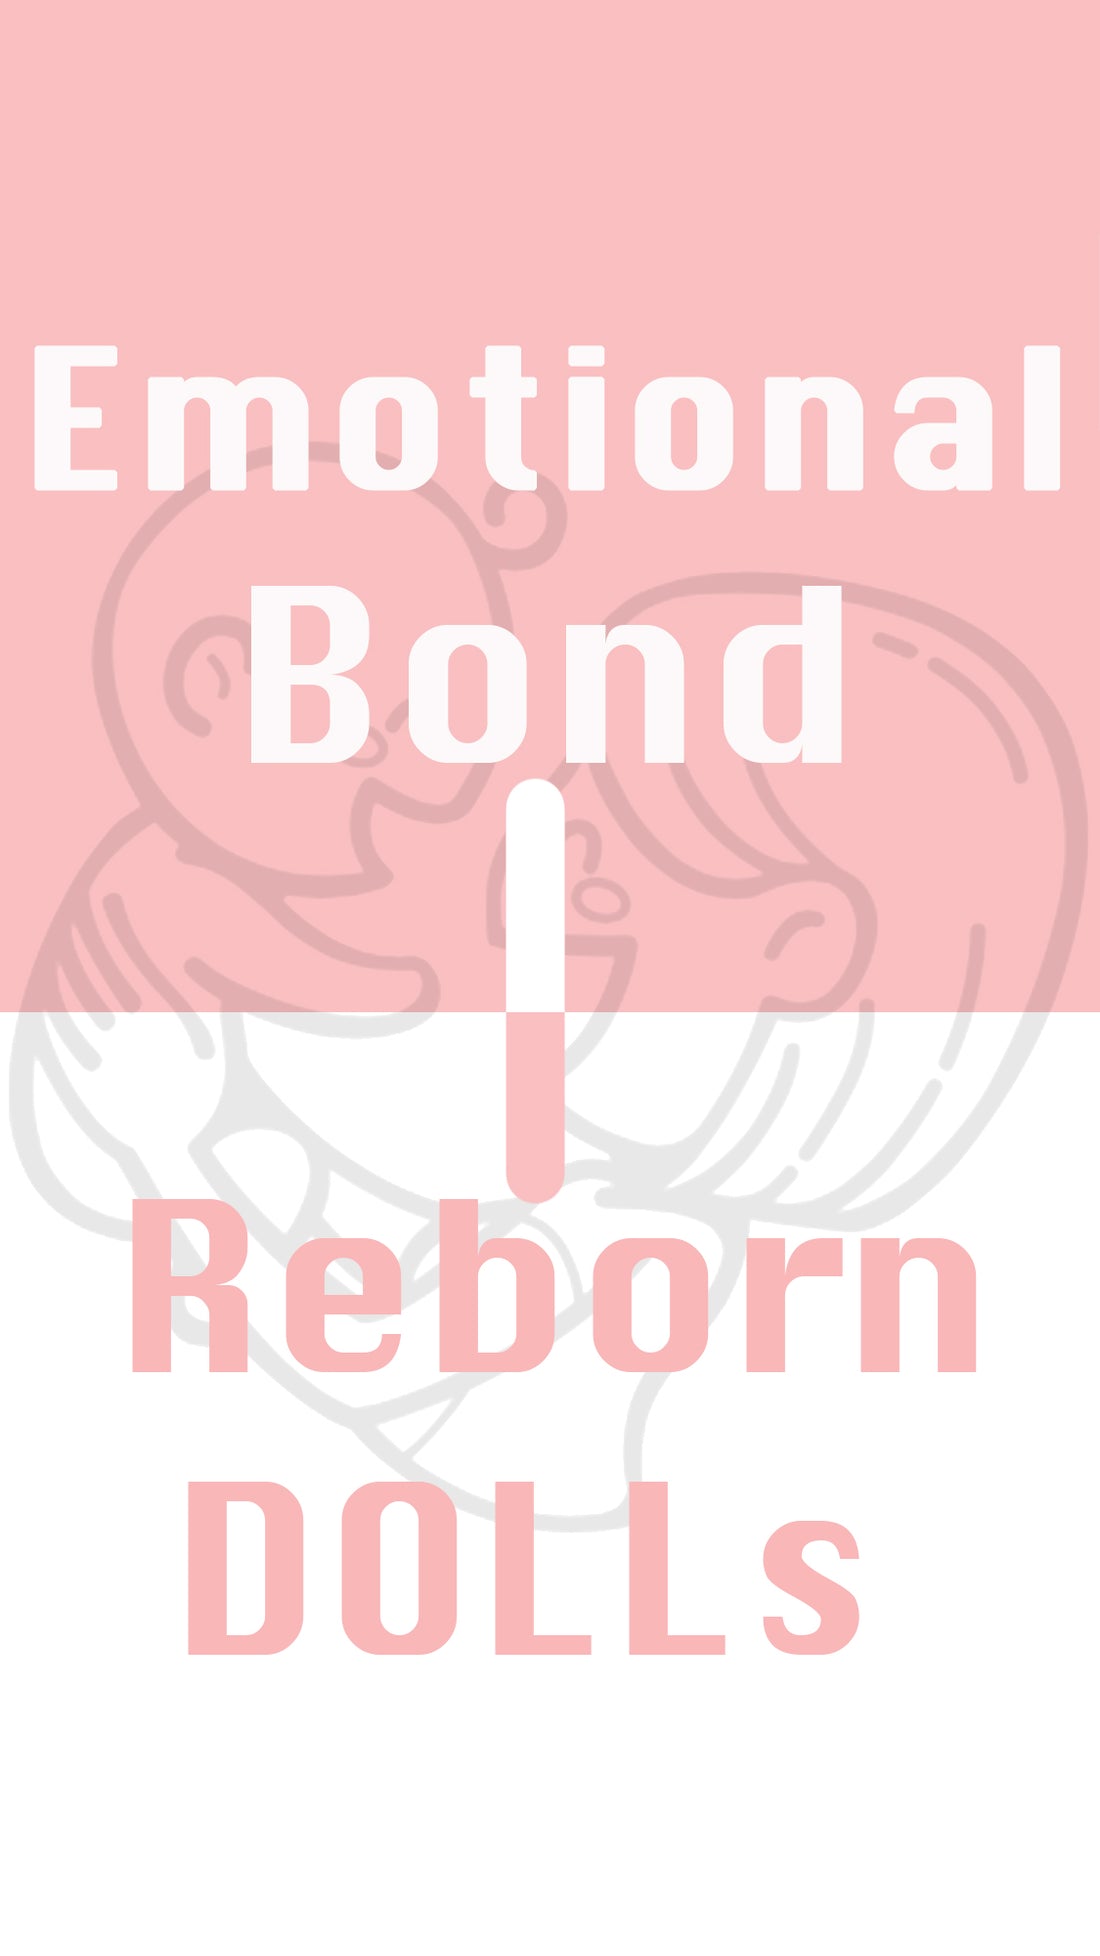 reborn dolls - Emotional bond